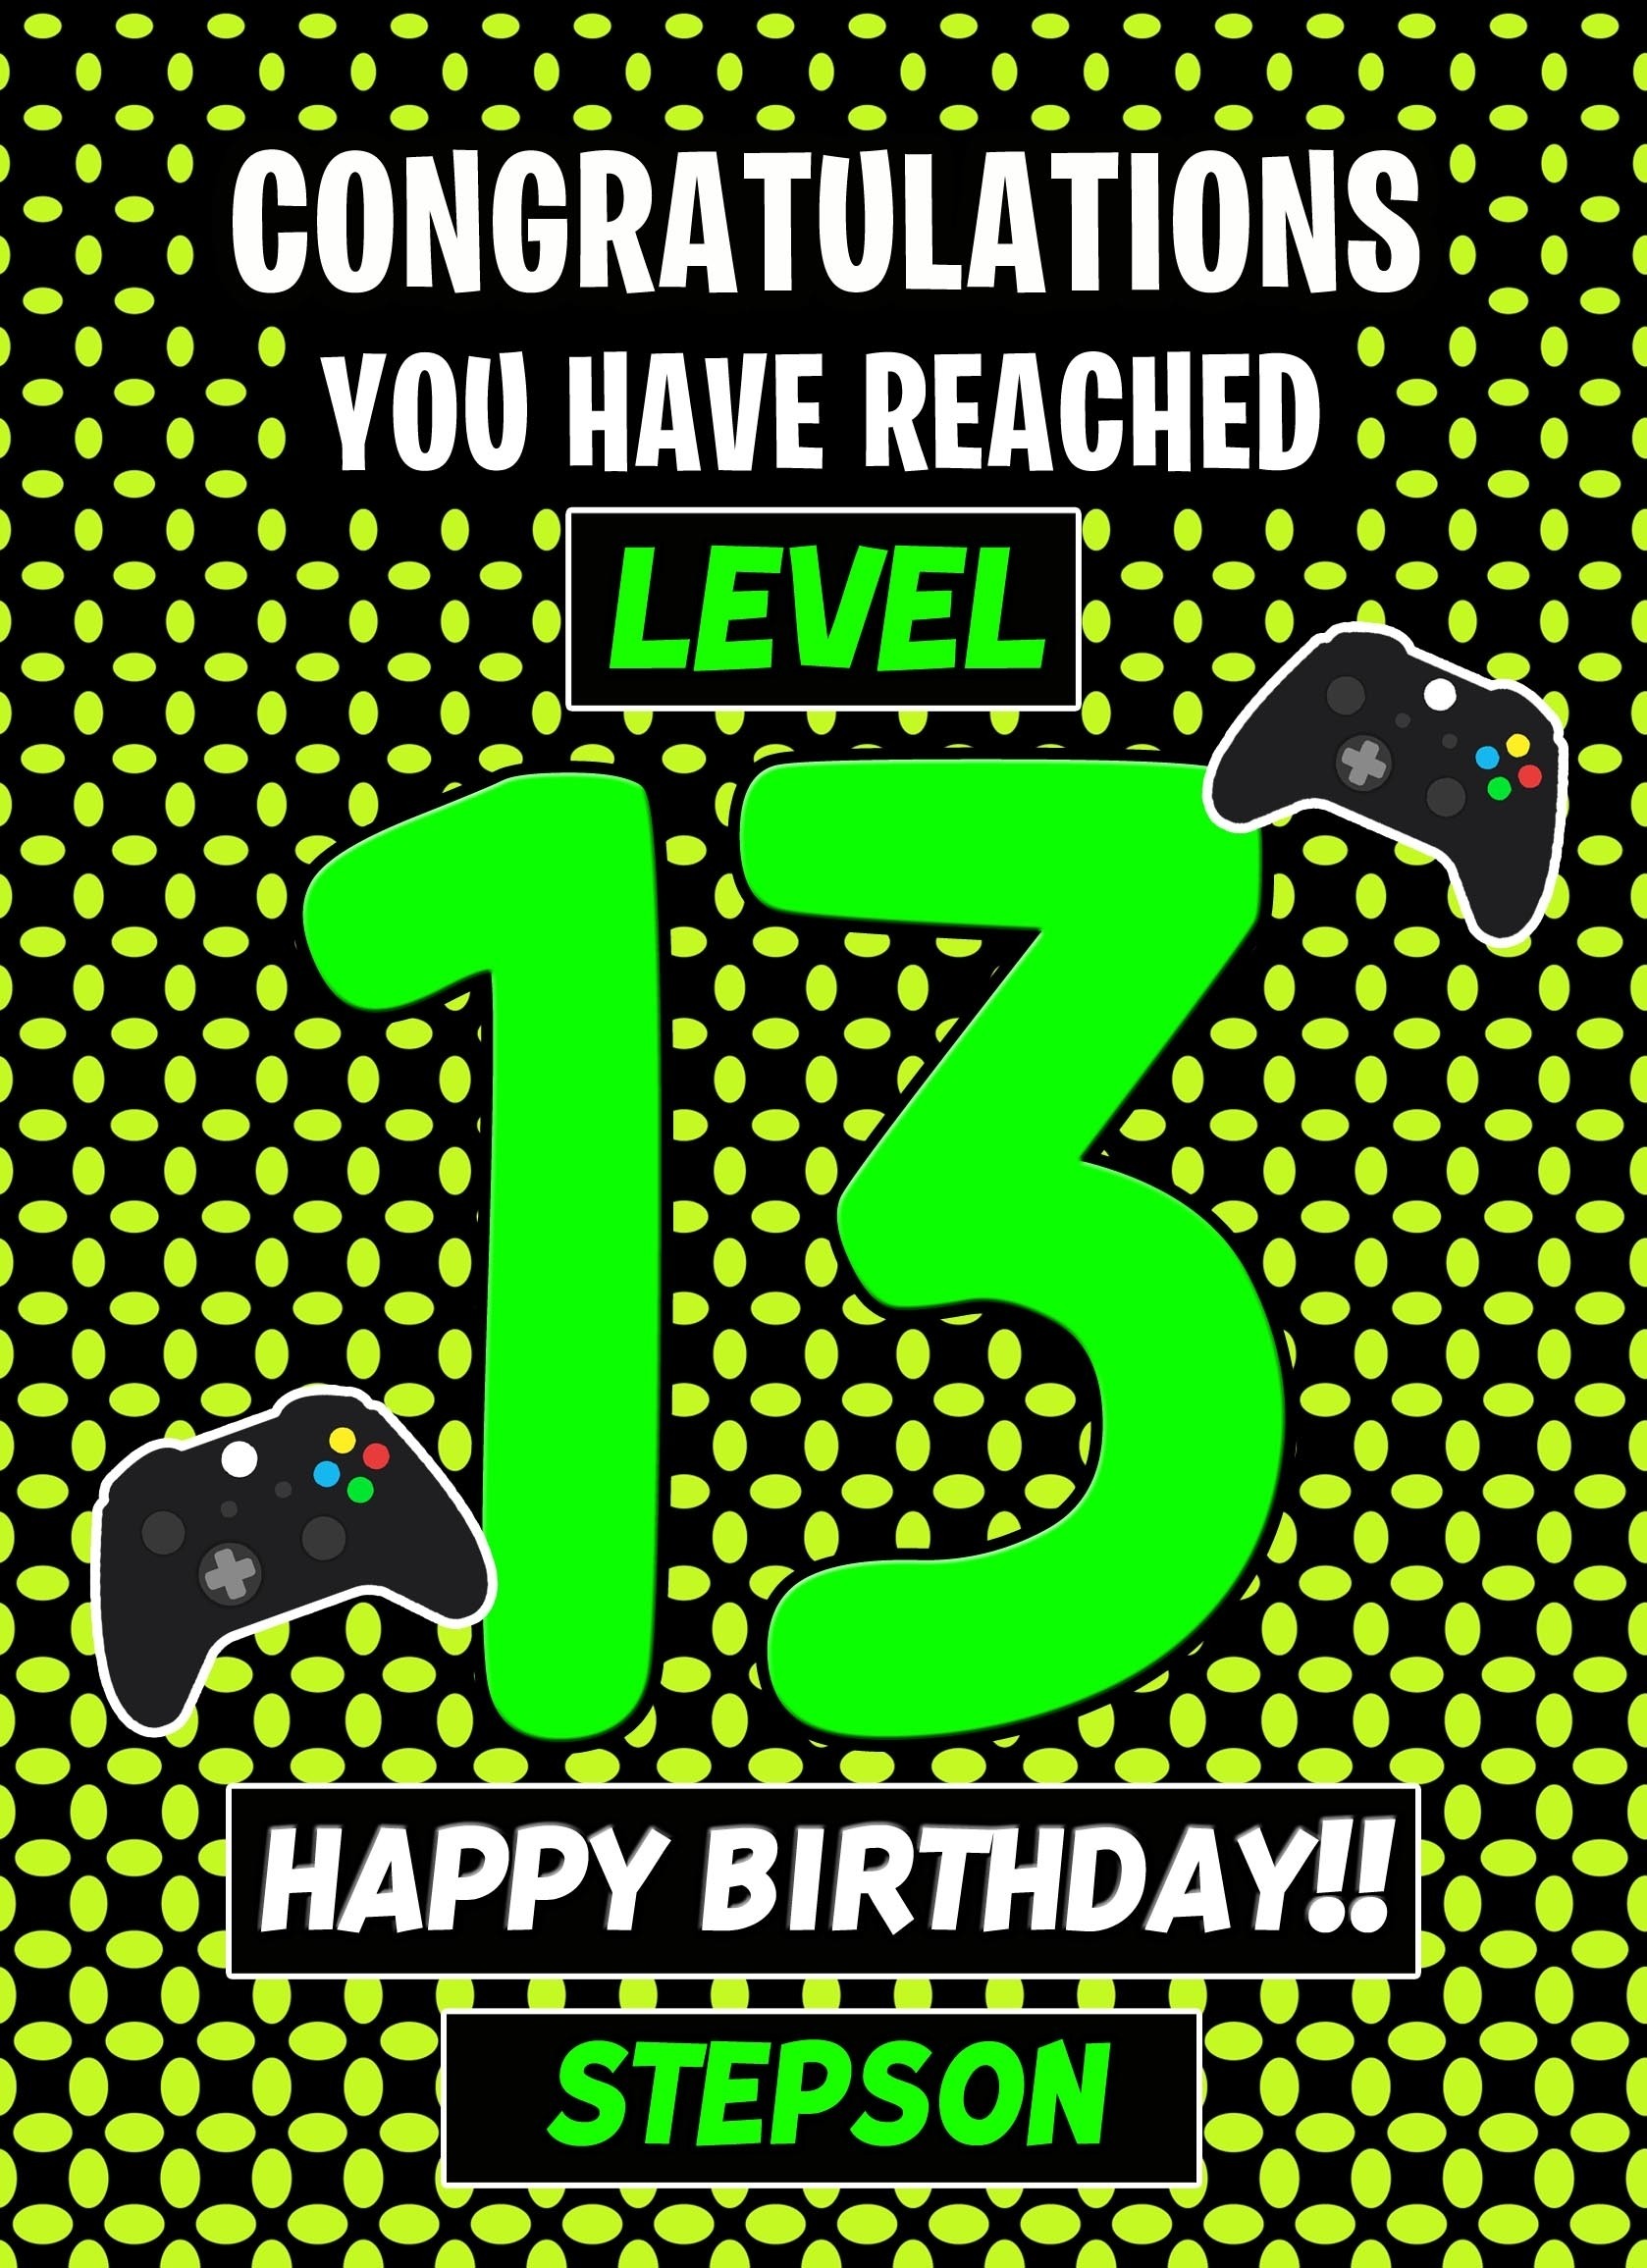 Stepson 13th Birthday Card (Level Up Gamer)